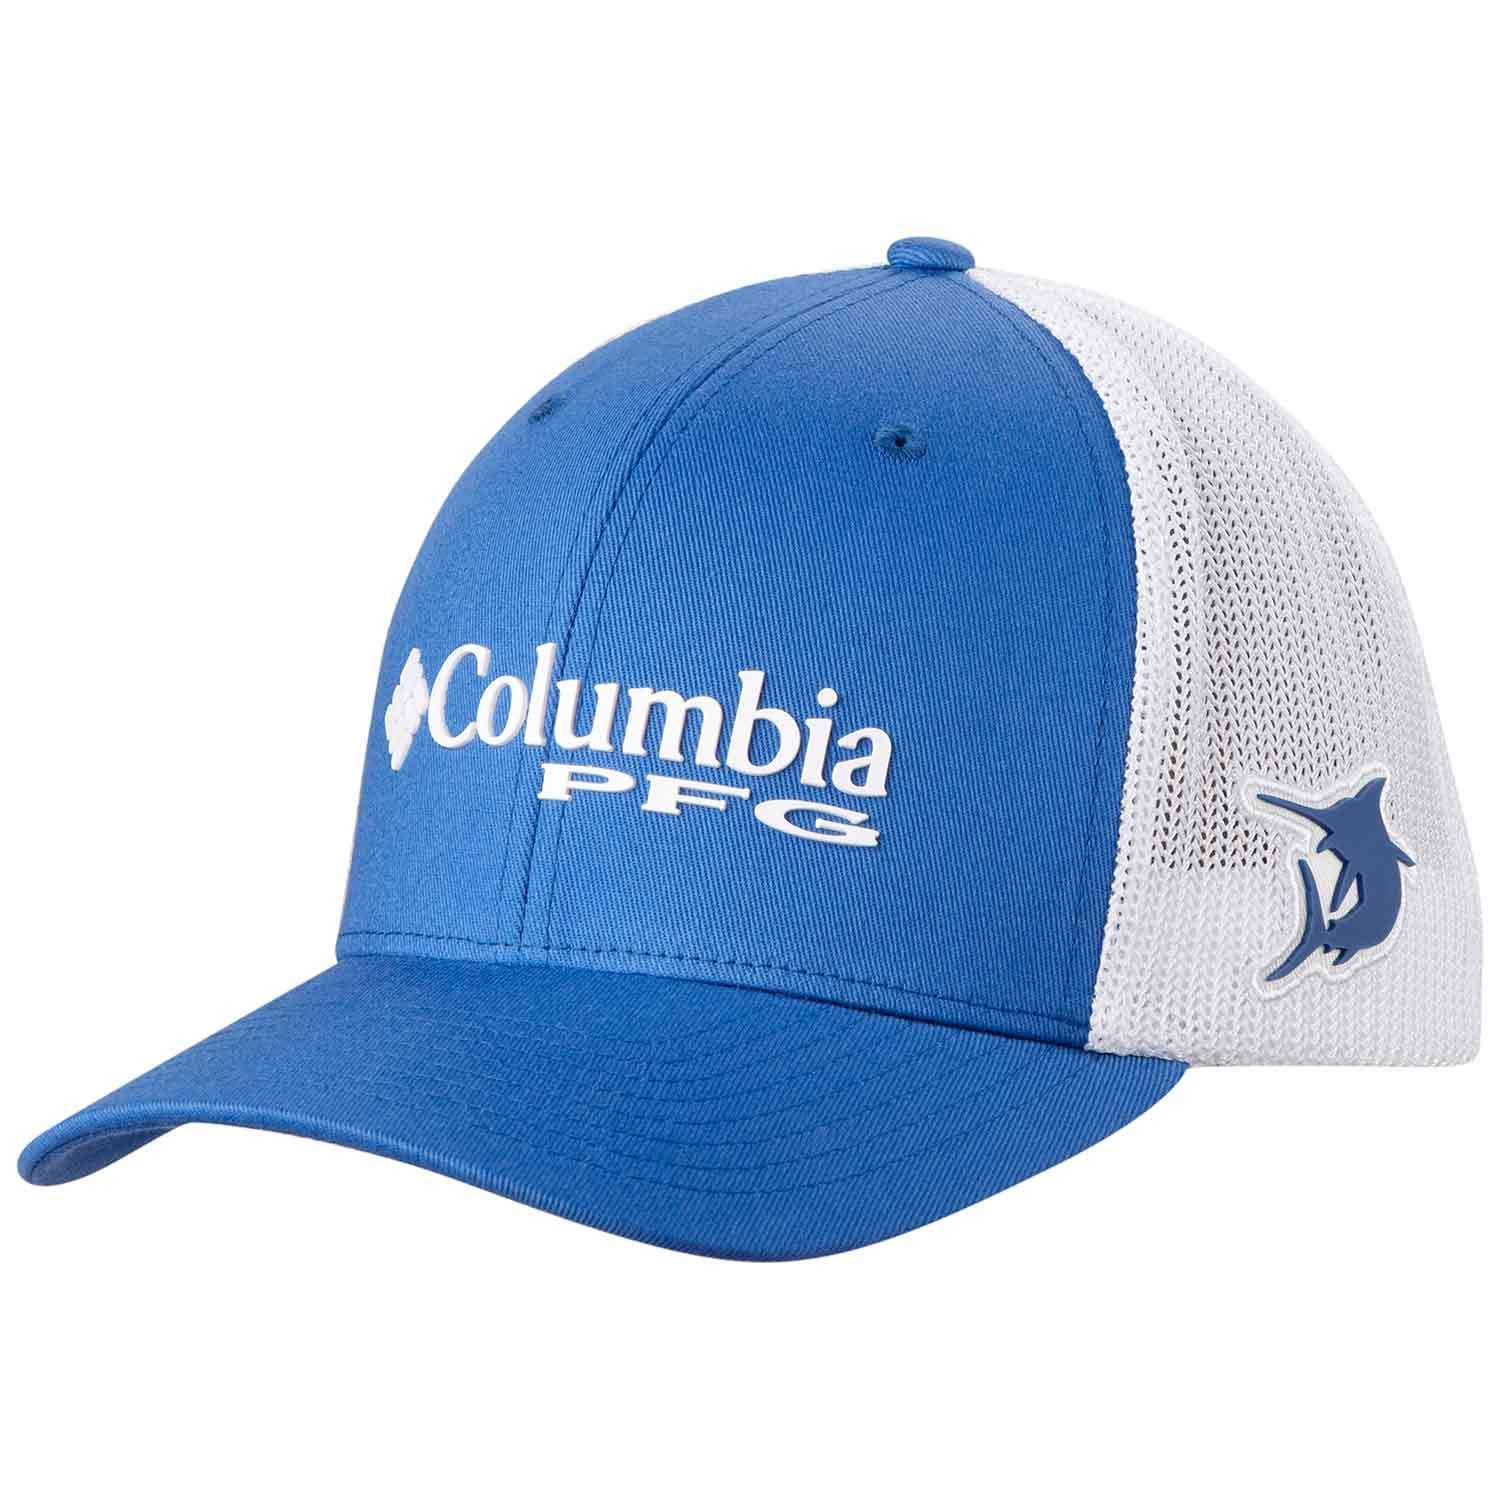 Columbia PFG Mesh Ball Cap - Blue - S/M